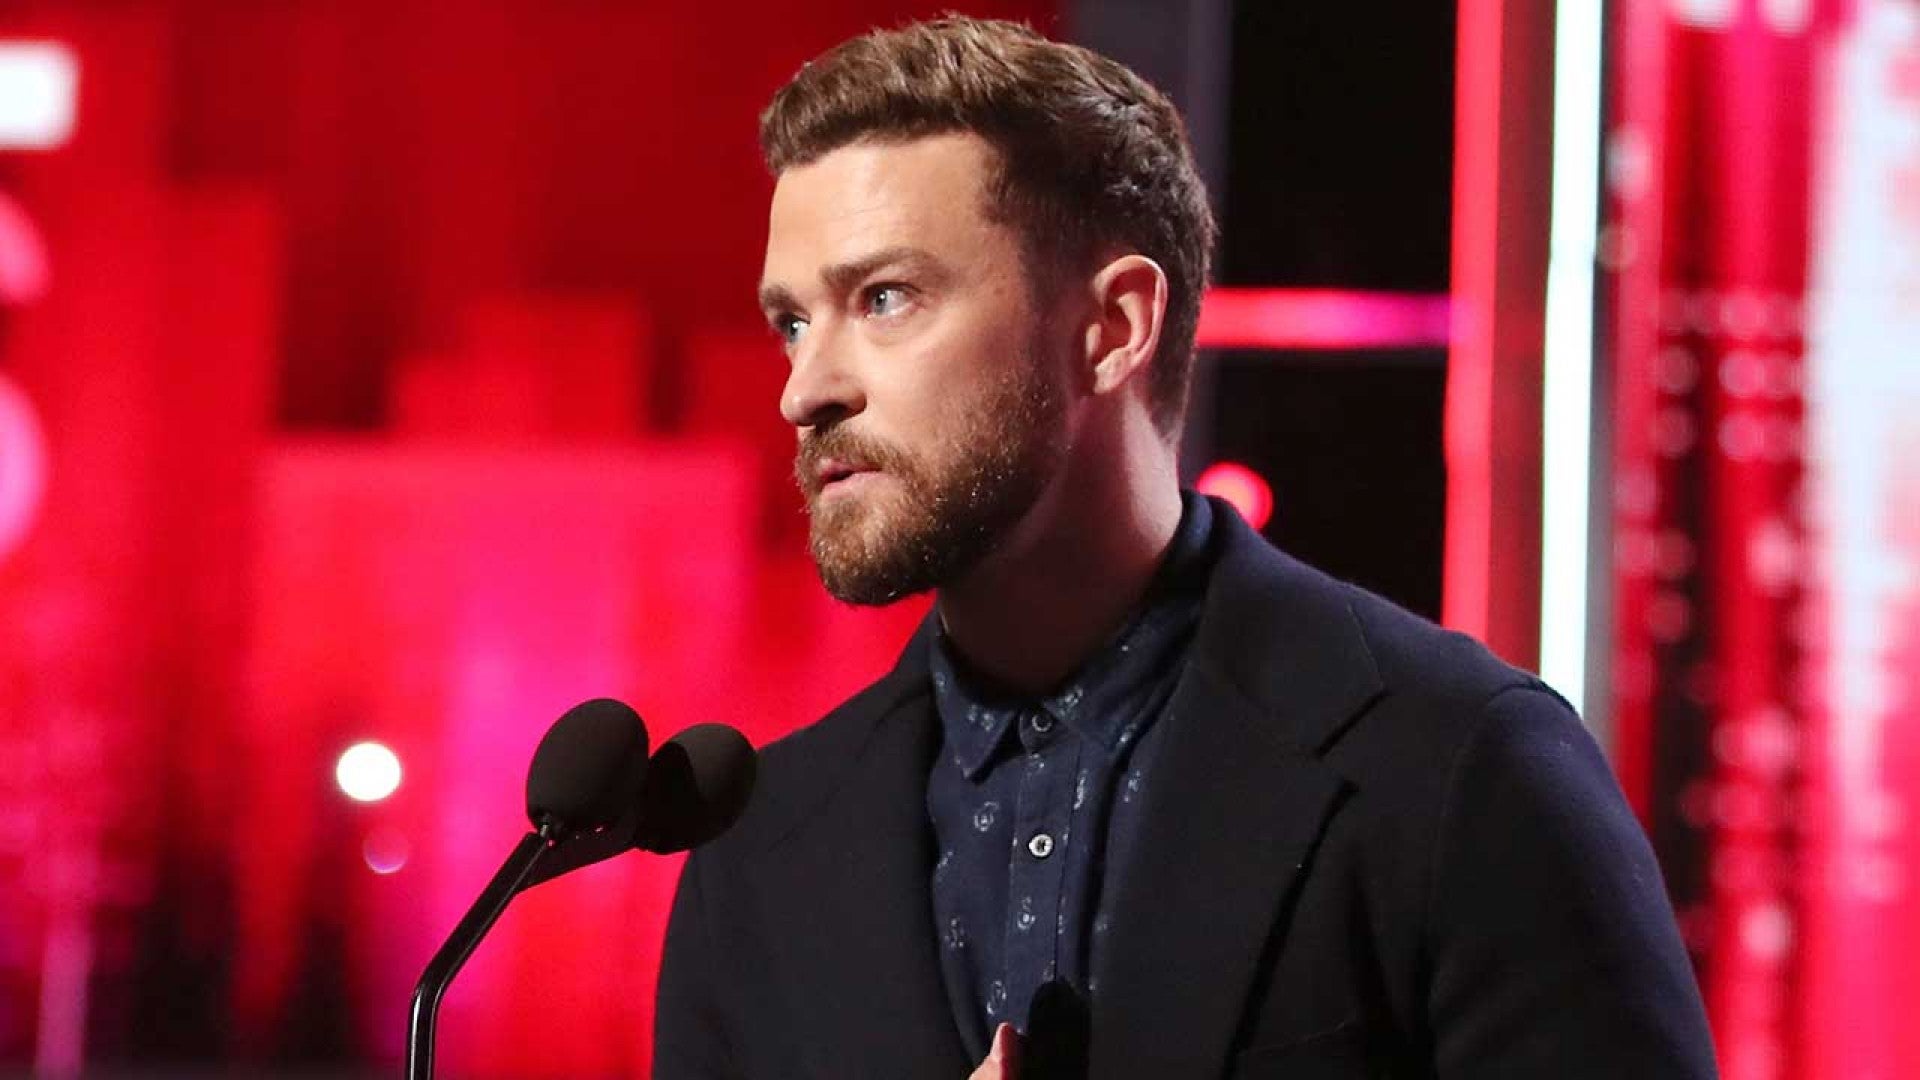 Justin Timberlake's speech sends a beautiful message about being